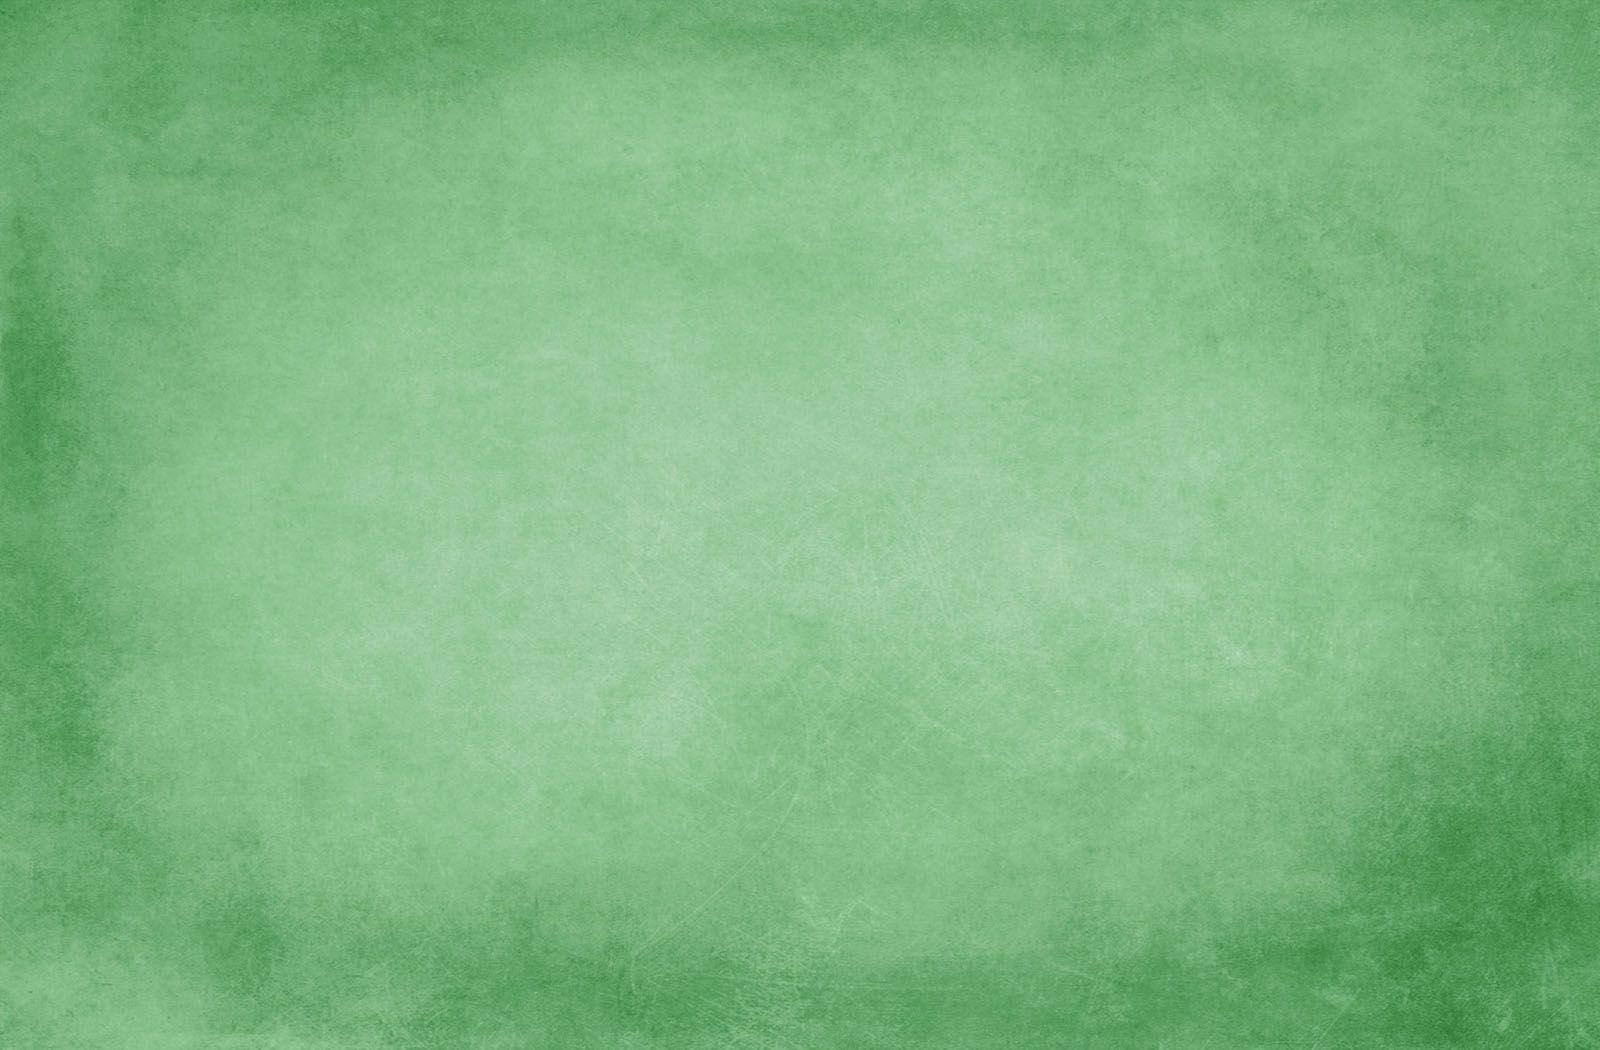 Solid Light Green Texture 308518 Image HD Wallpaper. Wallfoy.com